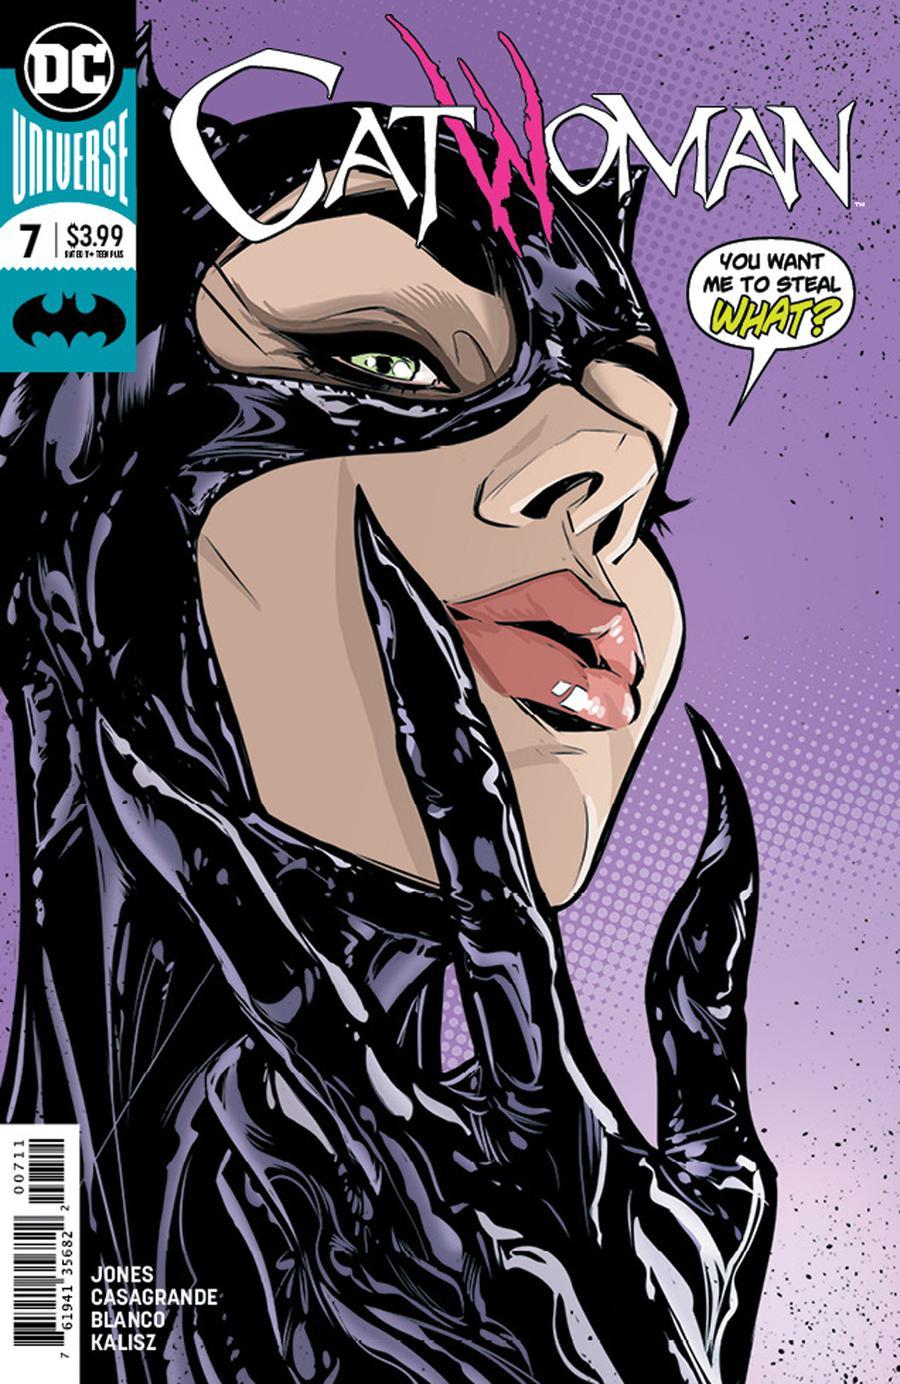 Catwoman Vol. 5 #7